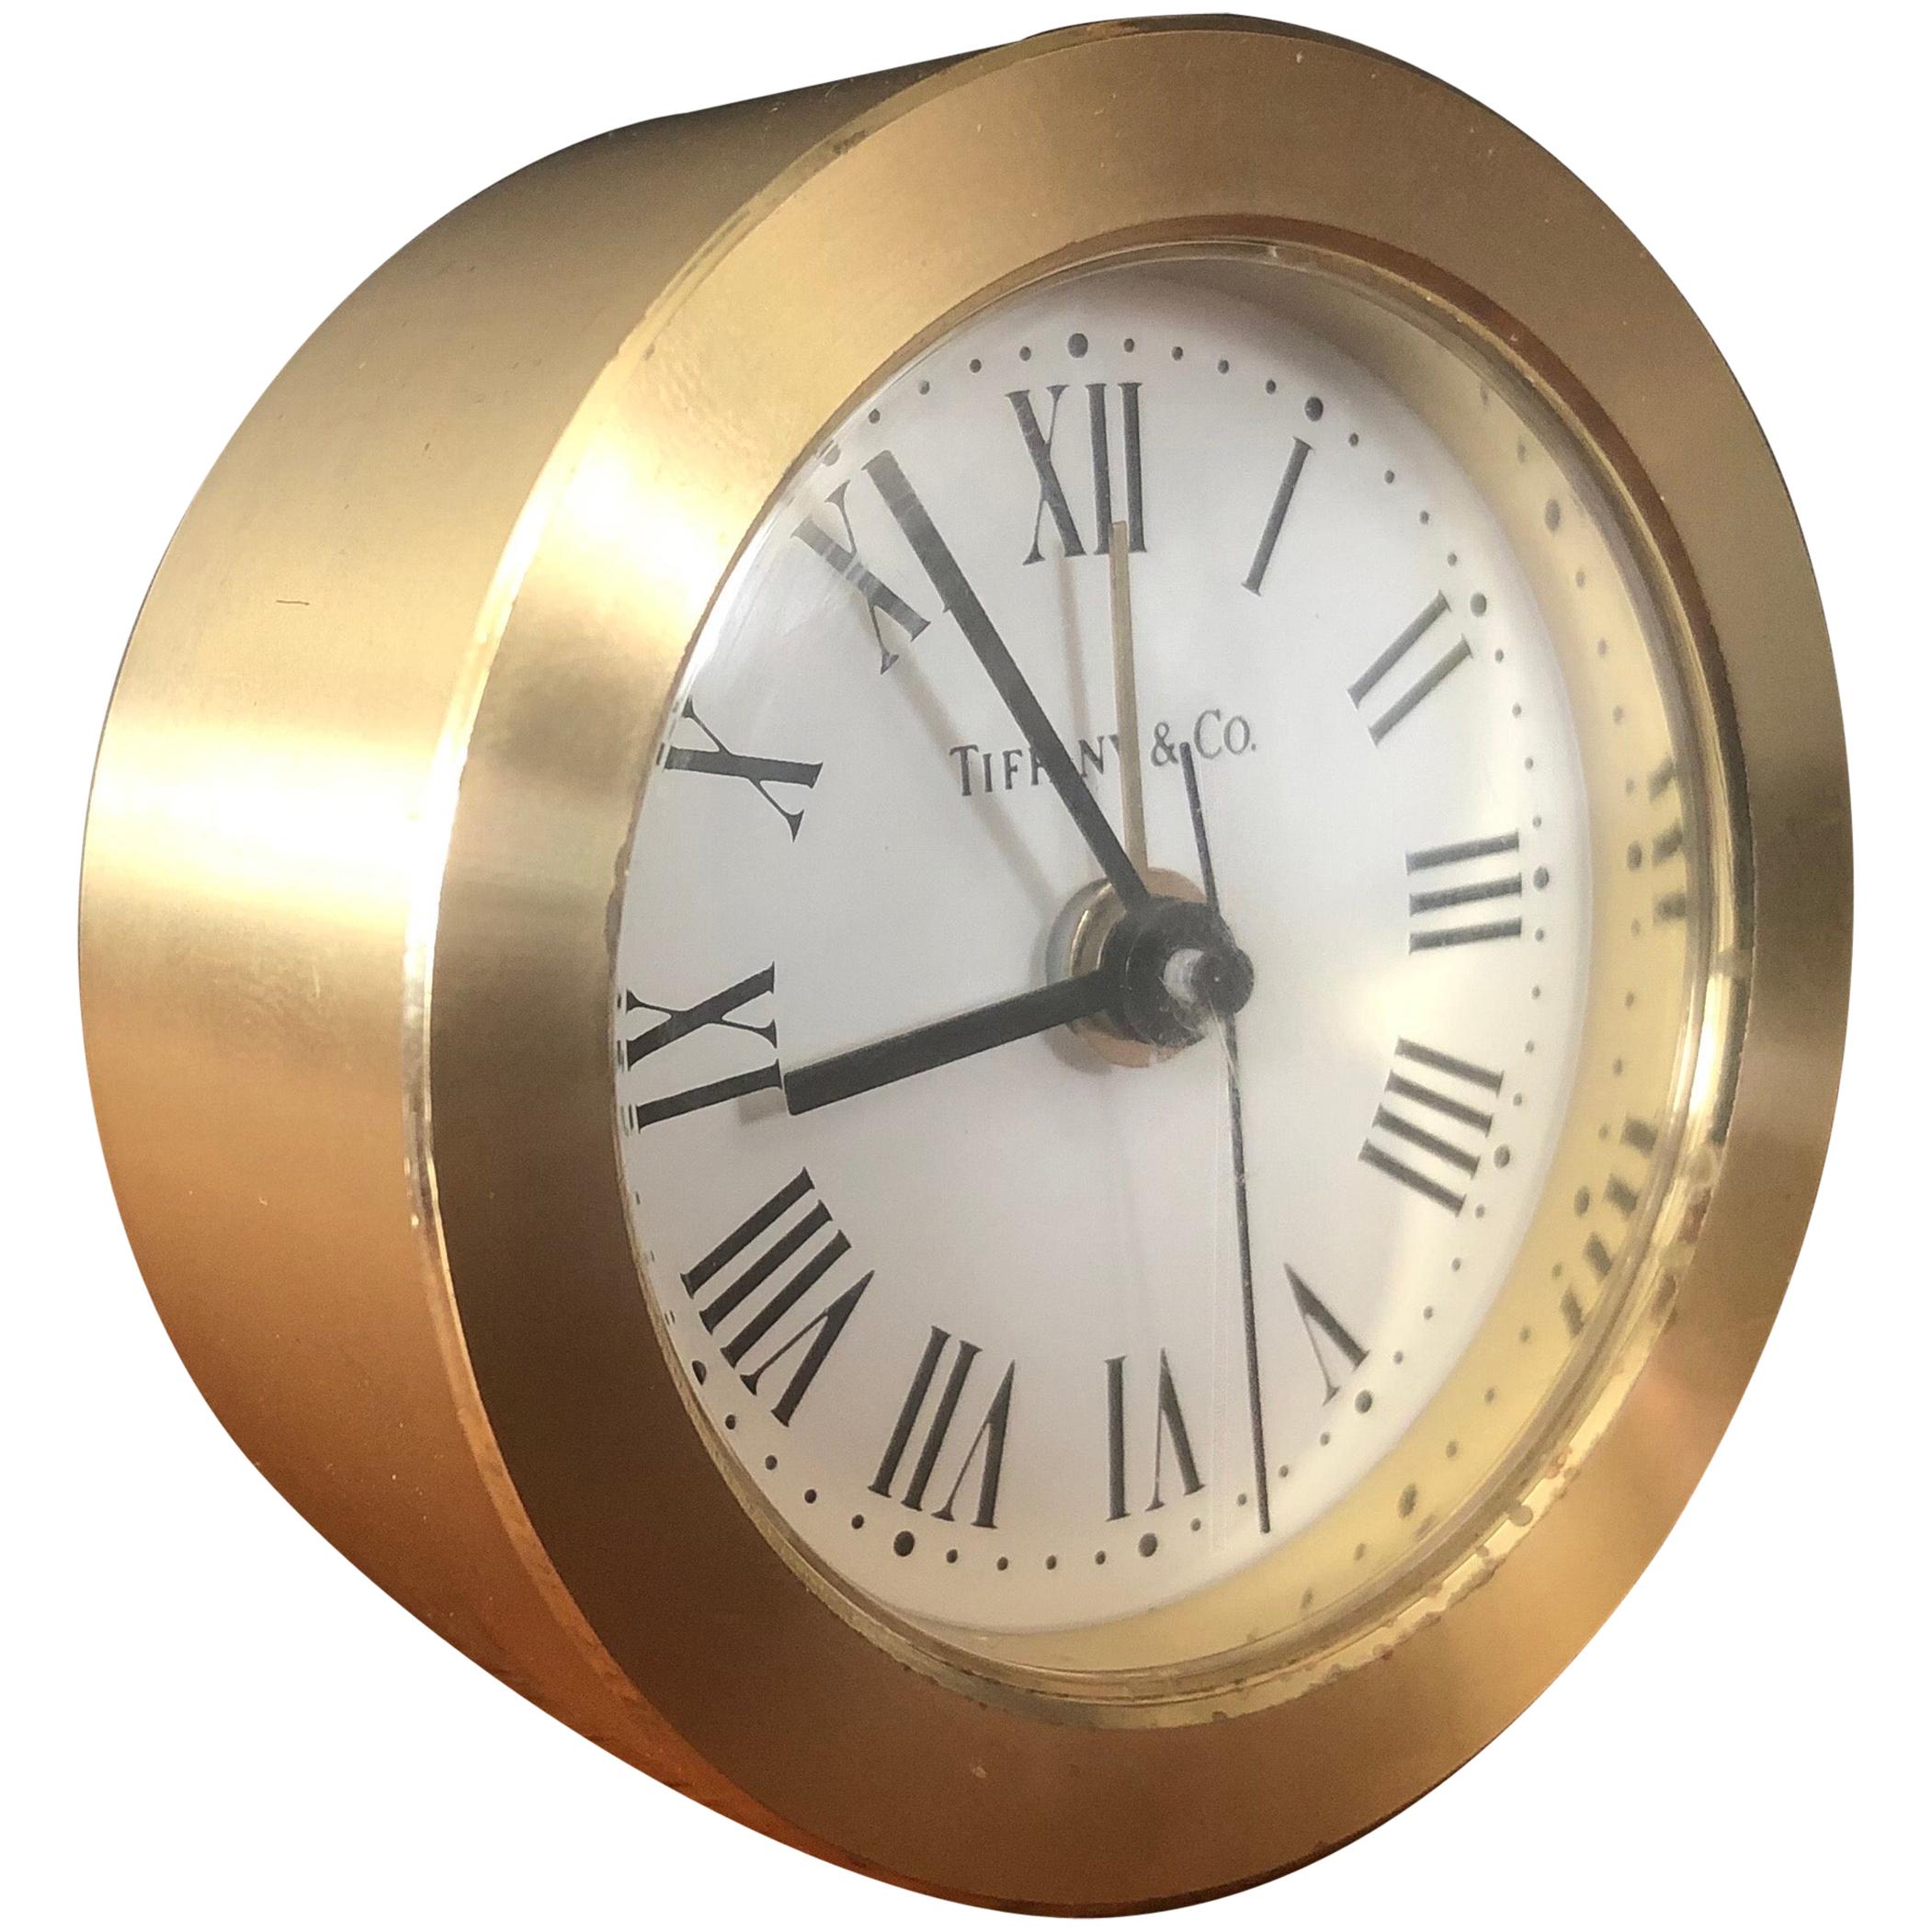 Brass Desk Alarm Clock by Tiffany & Co.